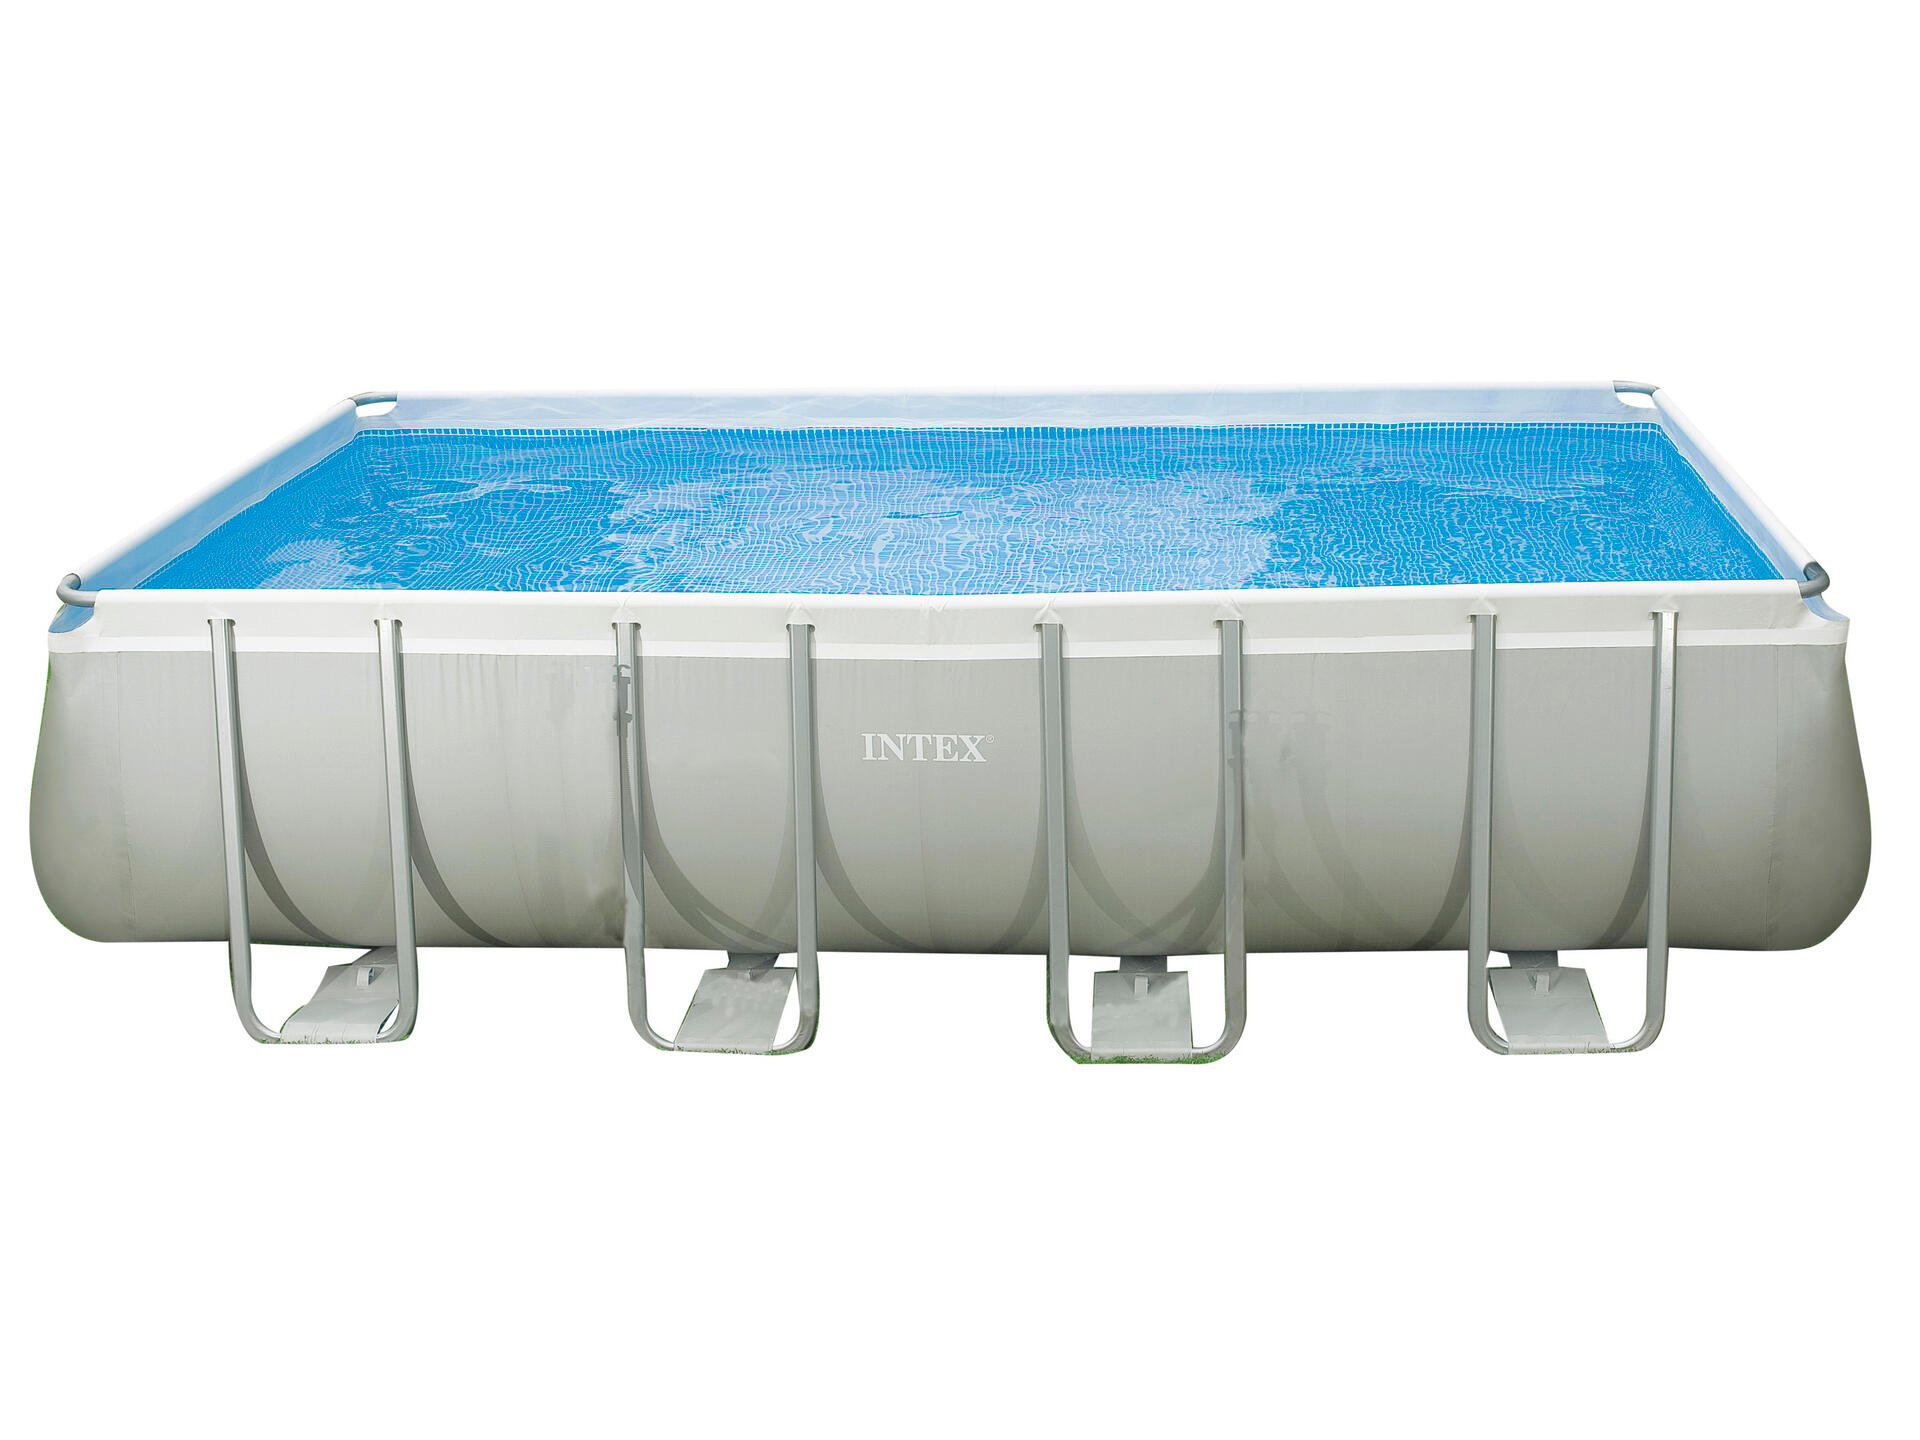 Intex Ultra Silver piscine 549x274x132 cm